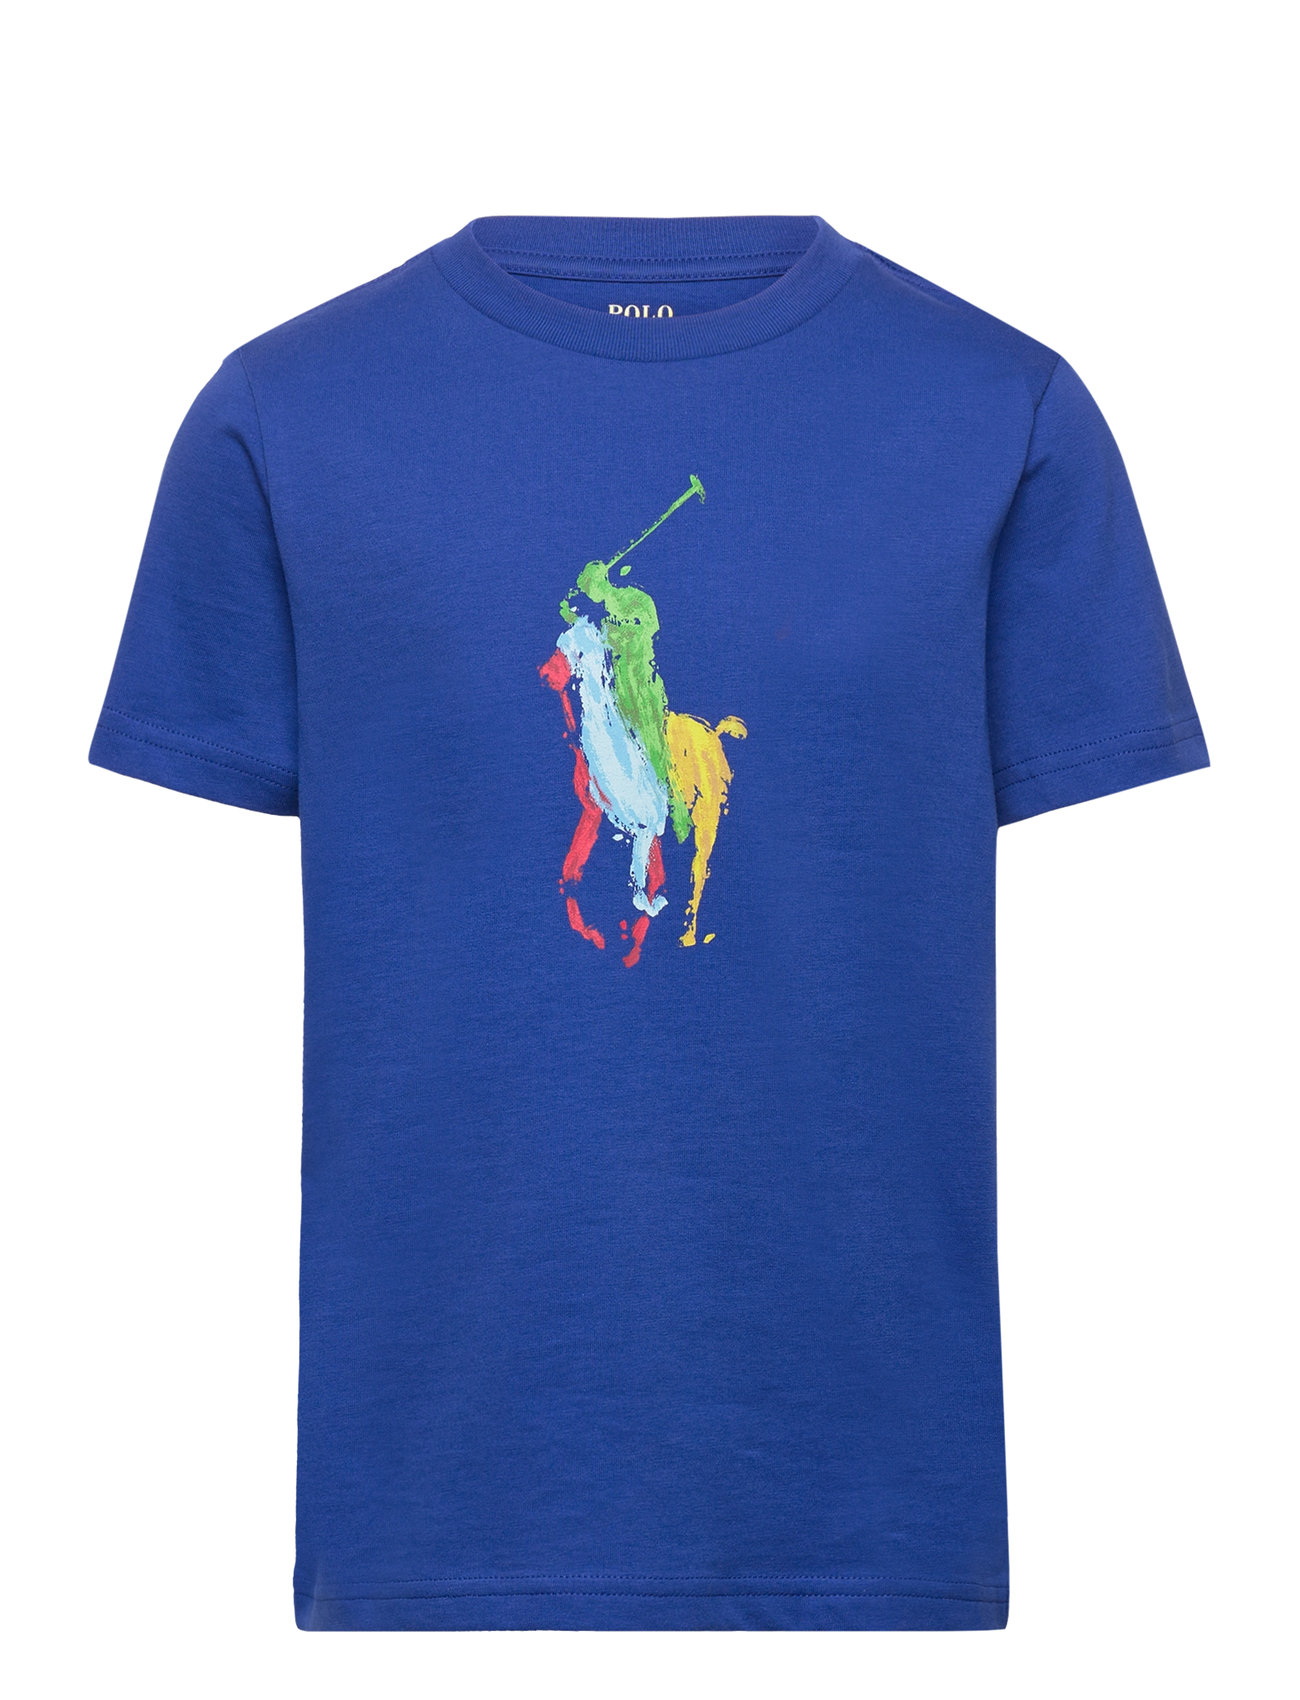 Big Pony Cotton Jersey Tee Tops T-shirts Short-sleeved Blue Ralph Lauren Kids